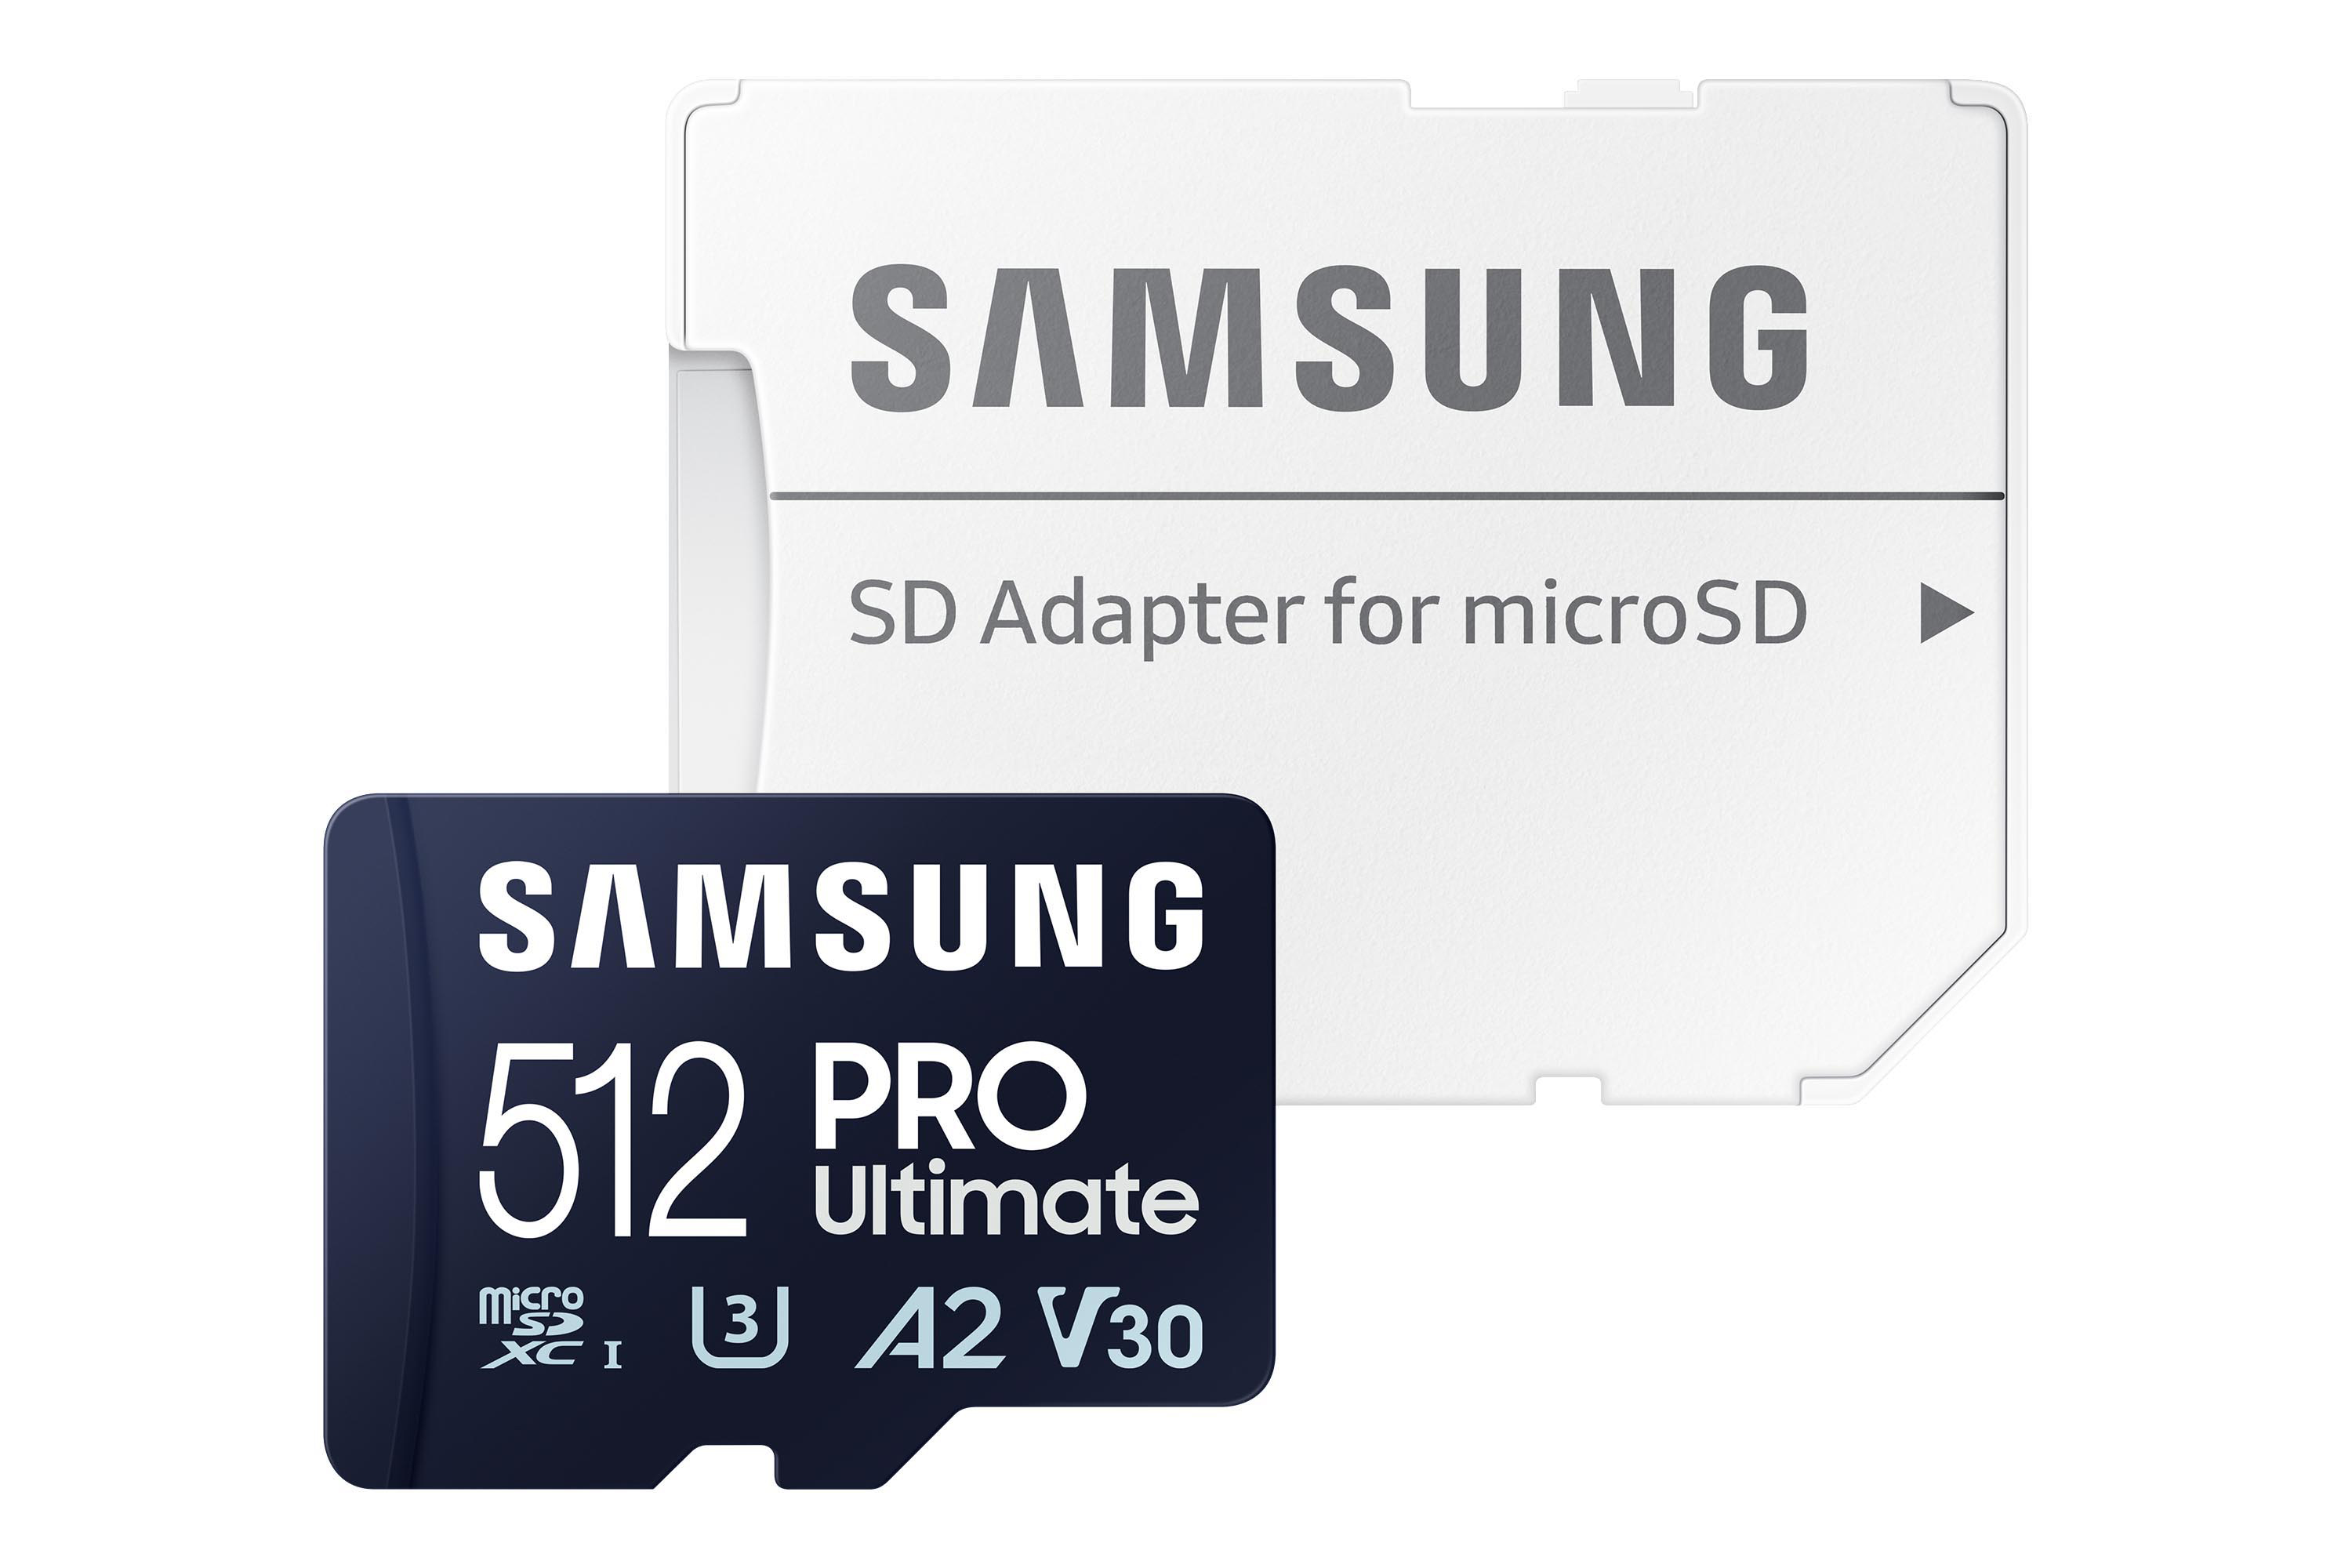 MB/s Ultimate, SAMSUNG PRO 200 Micro-SD Speicherkarte, 512 GB,